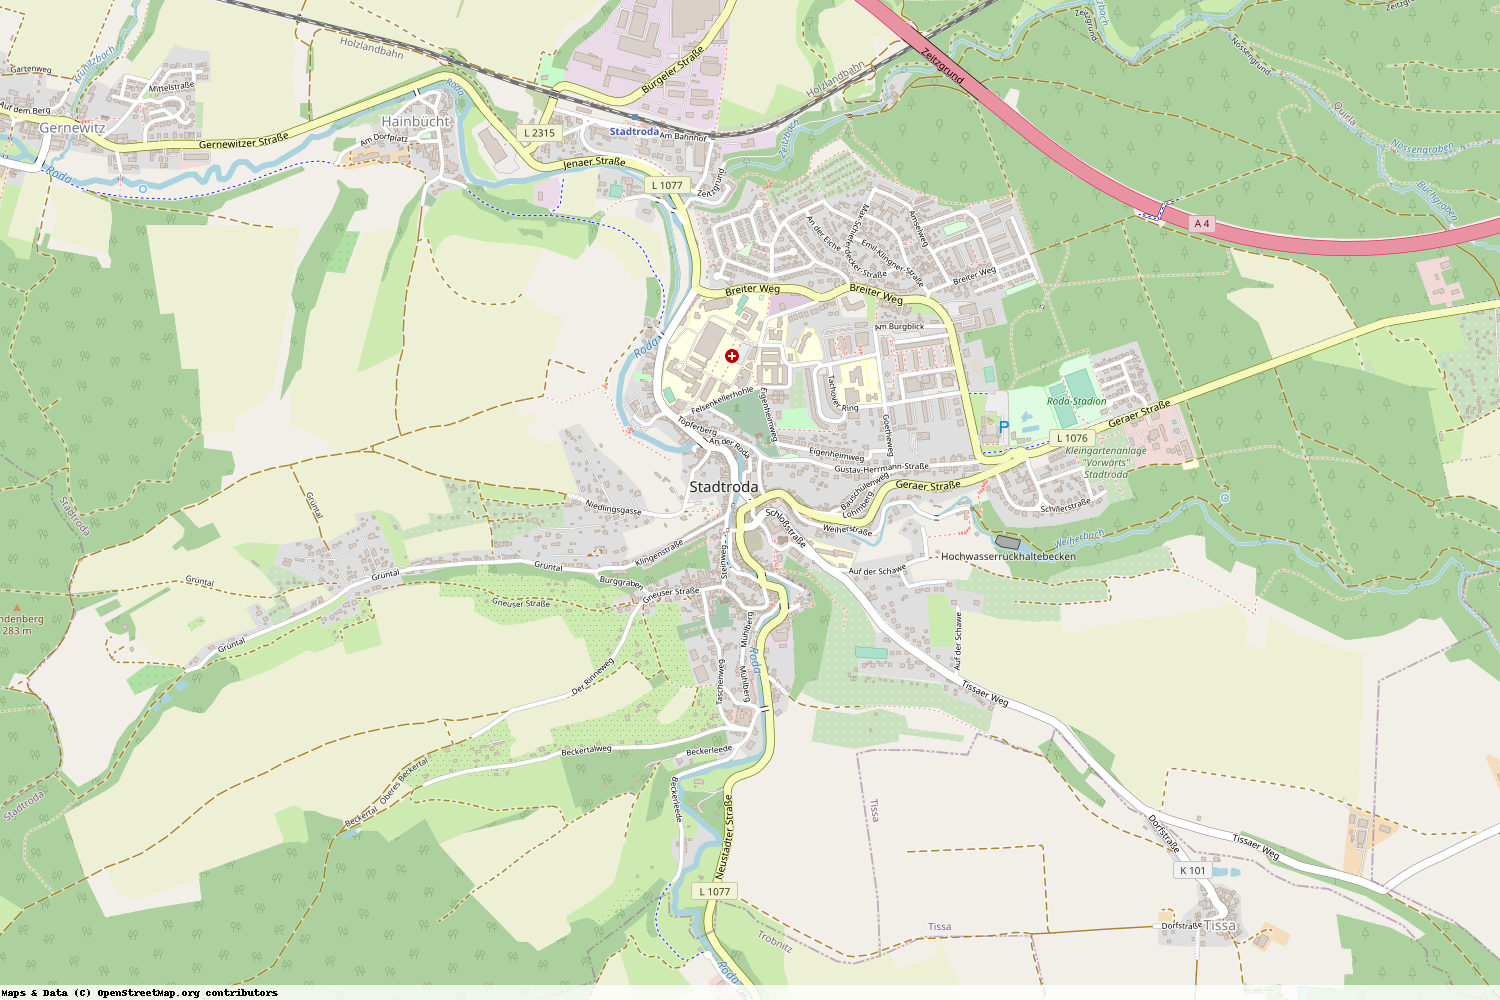 Ist gerade Stromausfall in Thüringen - Saale-Holzland-Kreis - Stadtroda?